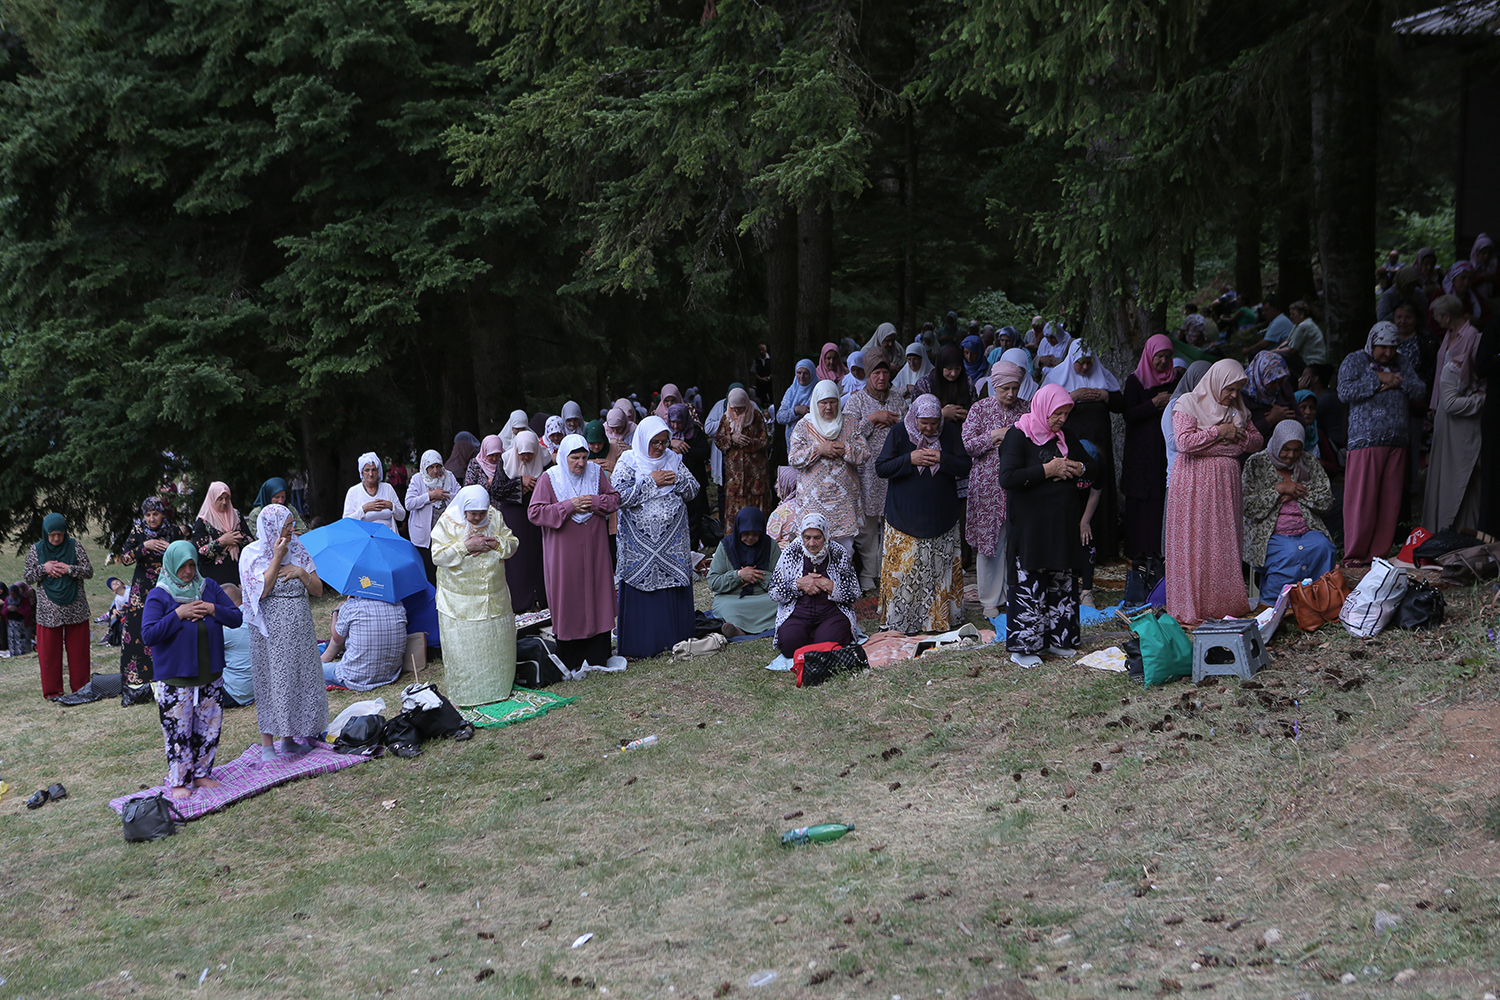 Muslim women join in the prayer on Ajvatovica meadow (photo: Konstantin Novakovic)